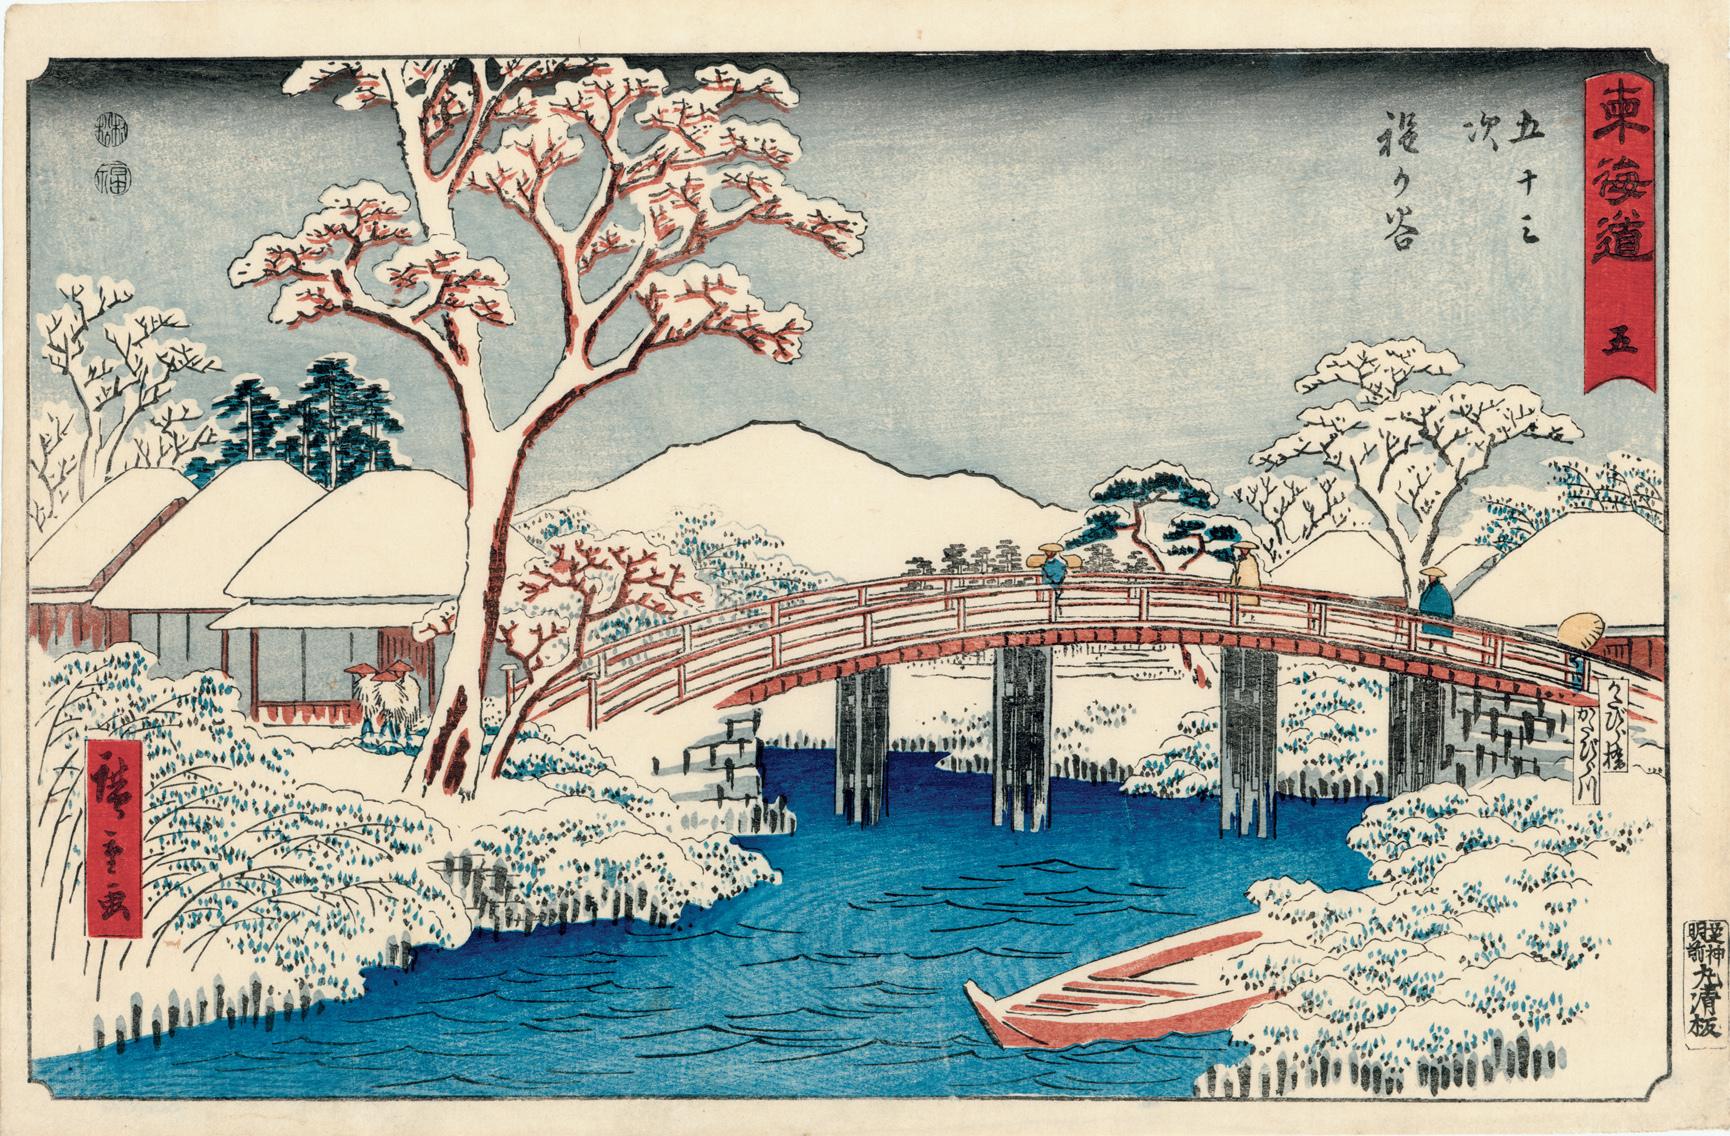 Hiroshige: The Katabira River and Bridge at Hodogaya (Sold 